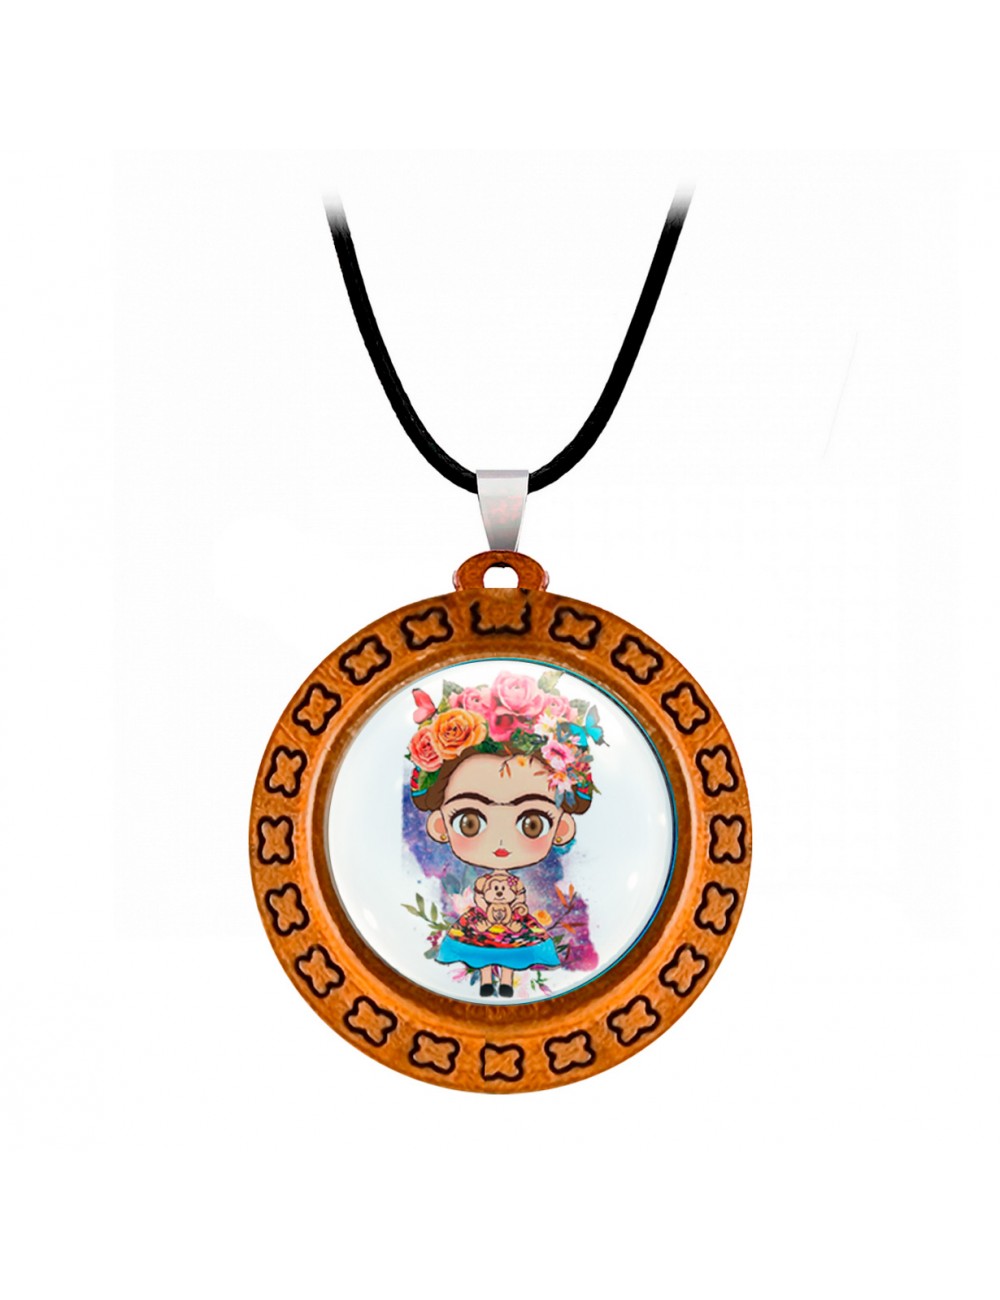 Collar Frida Kahlo 19,900.00